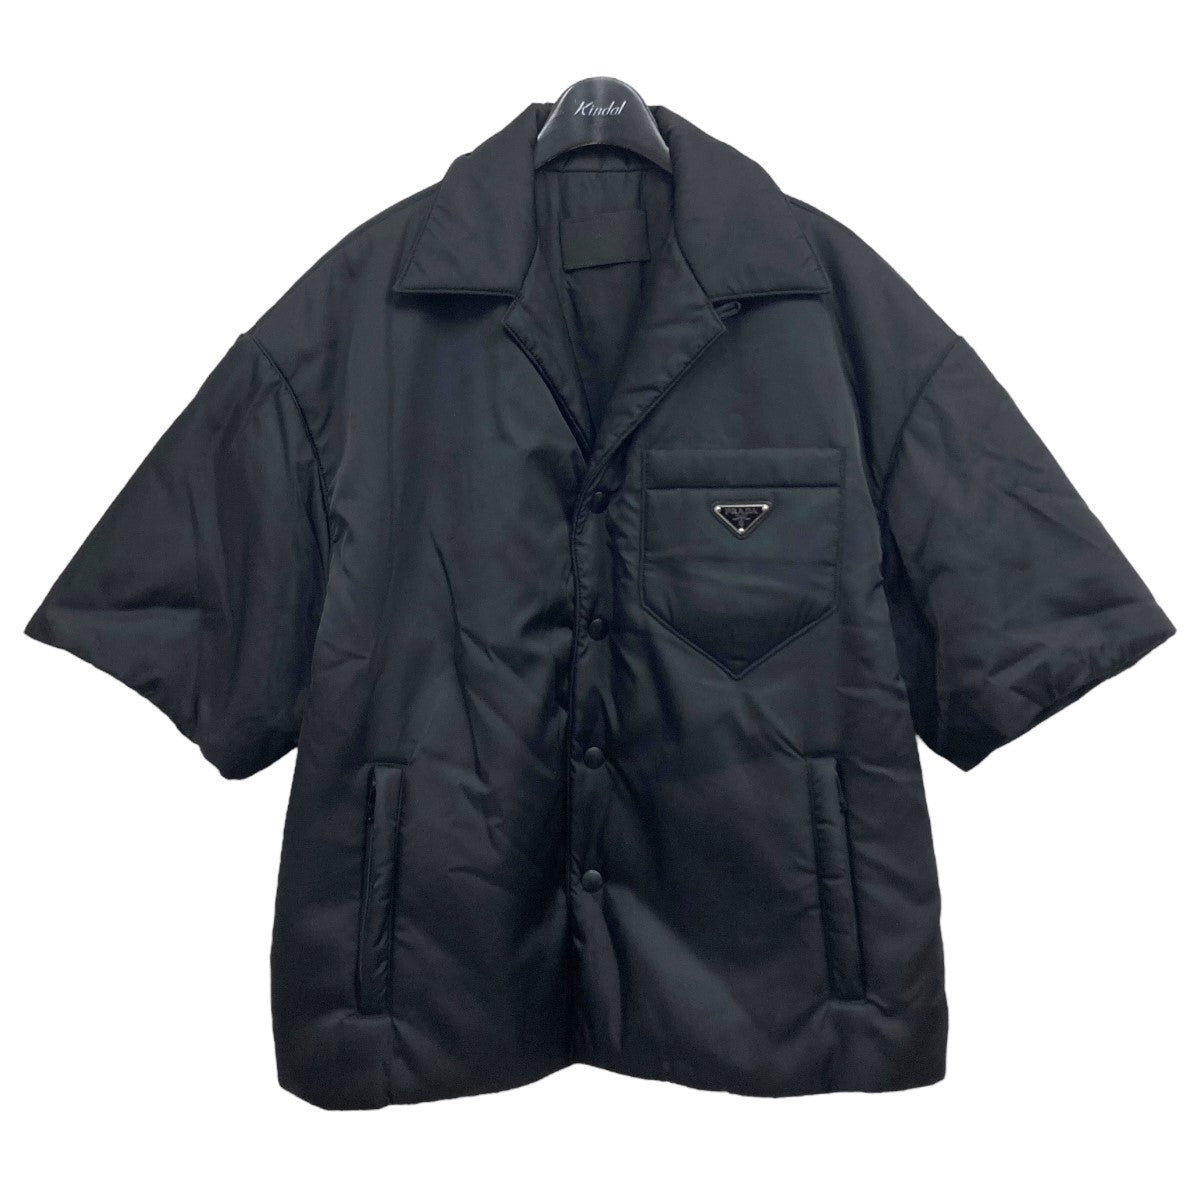 PRADA(プラダ) トライアングルロゴ中綿シャツ SC458M ブラック サイズ 